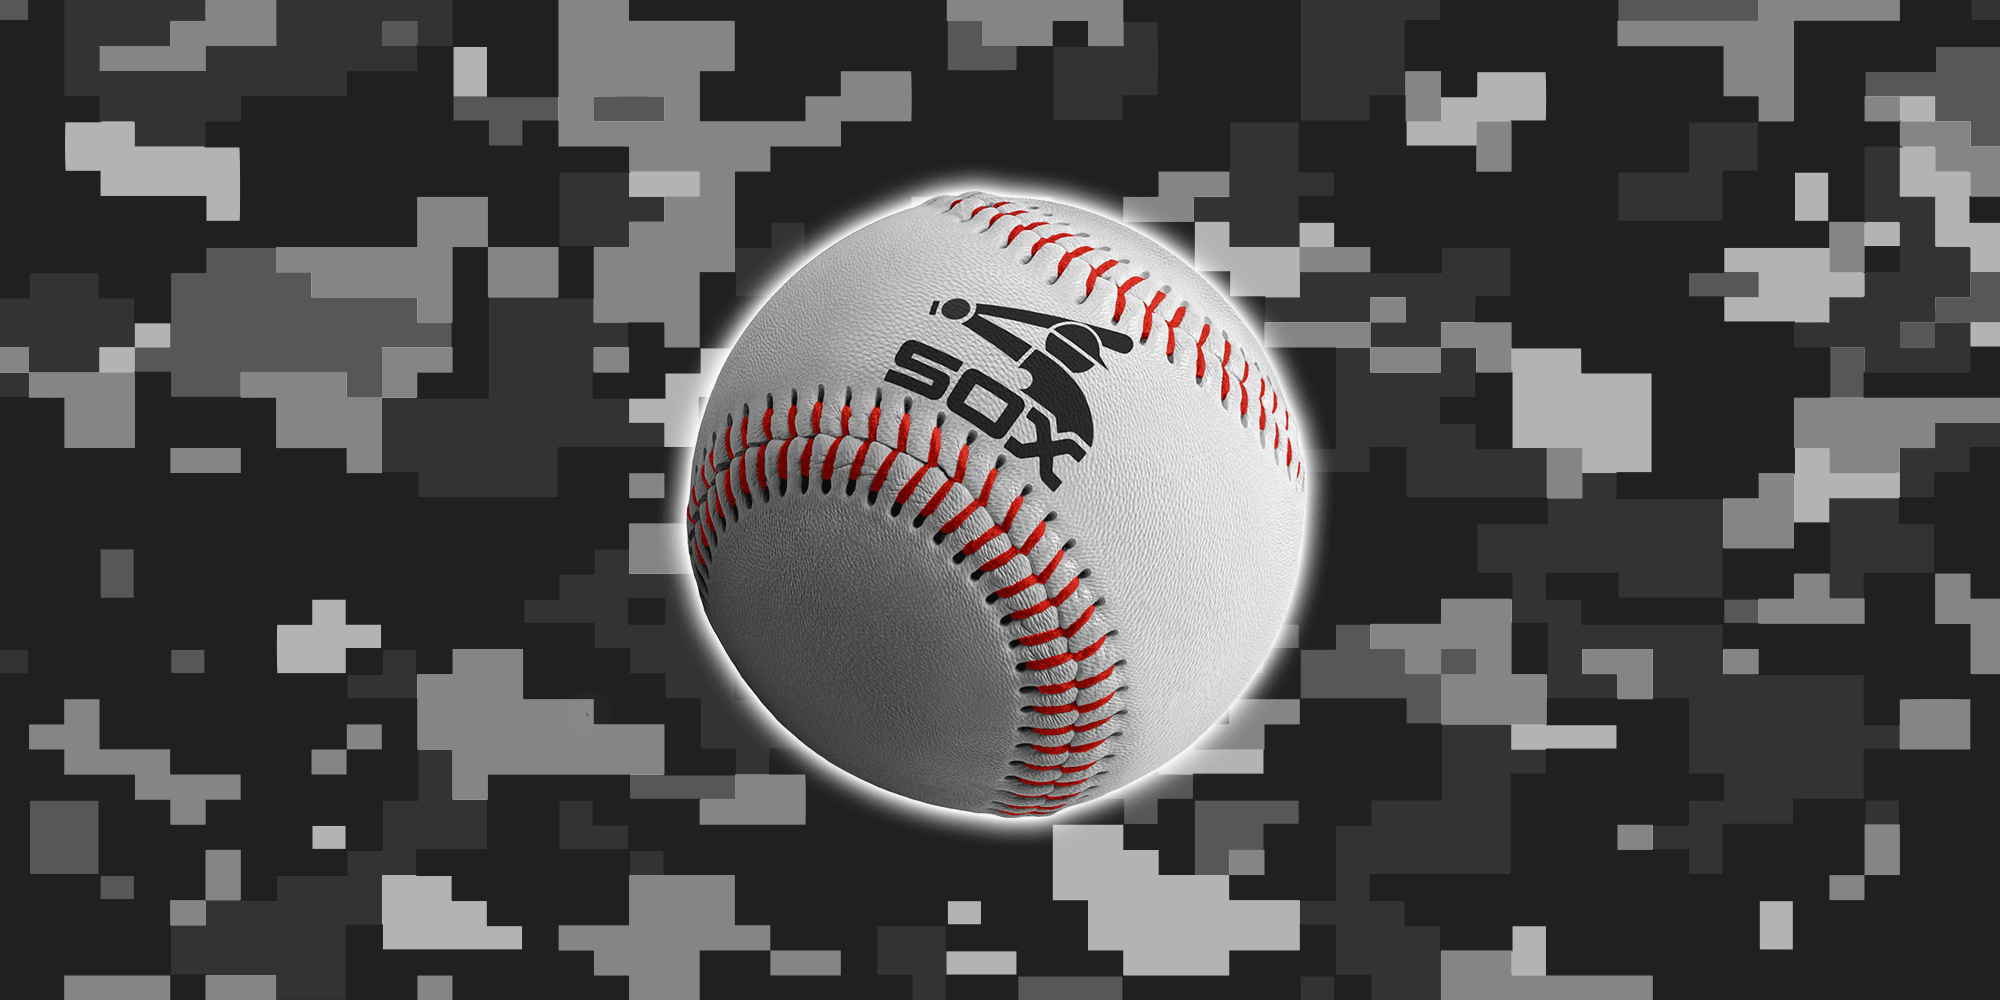 Lincoln Sox Baseball